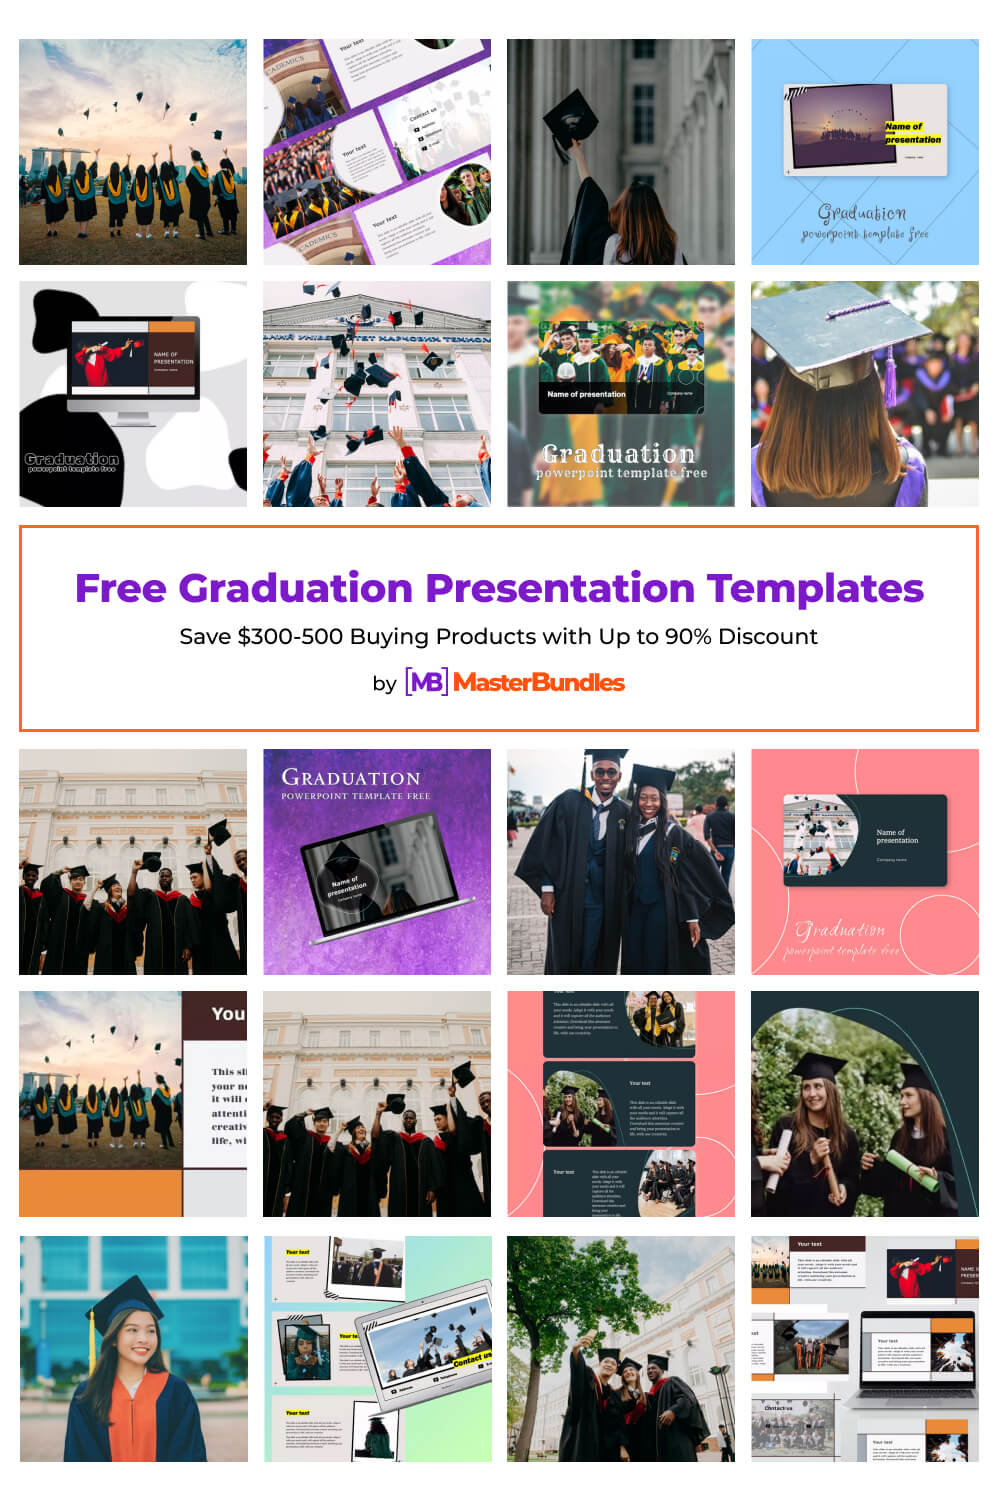 free graduation presentation templates pinterest image.